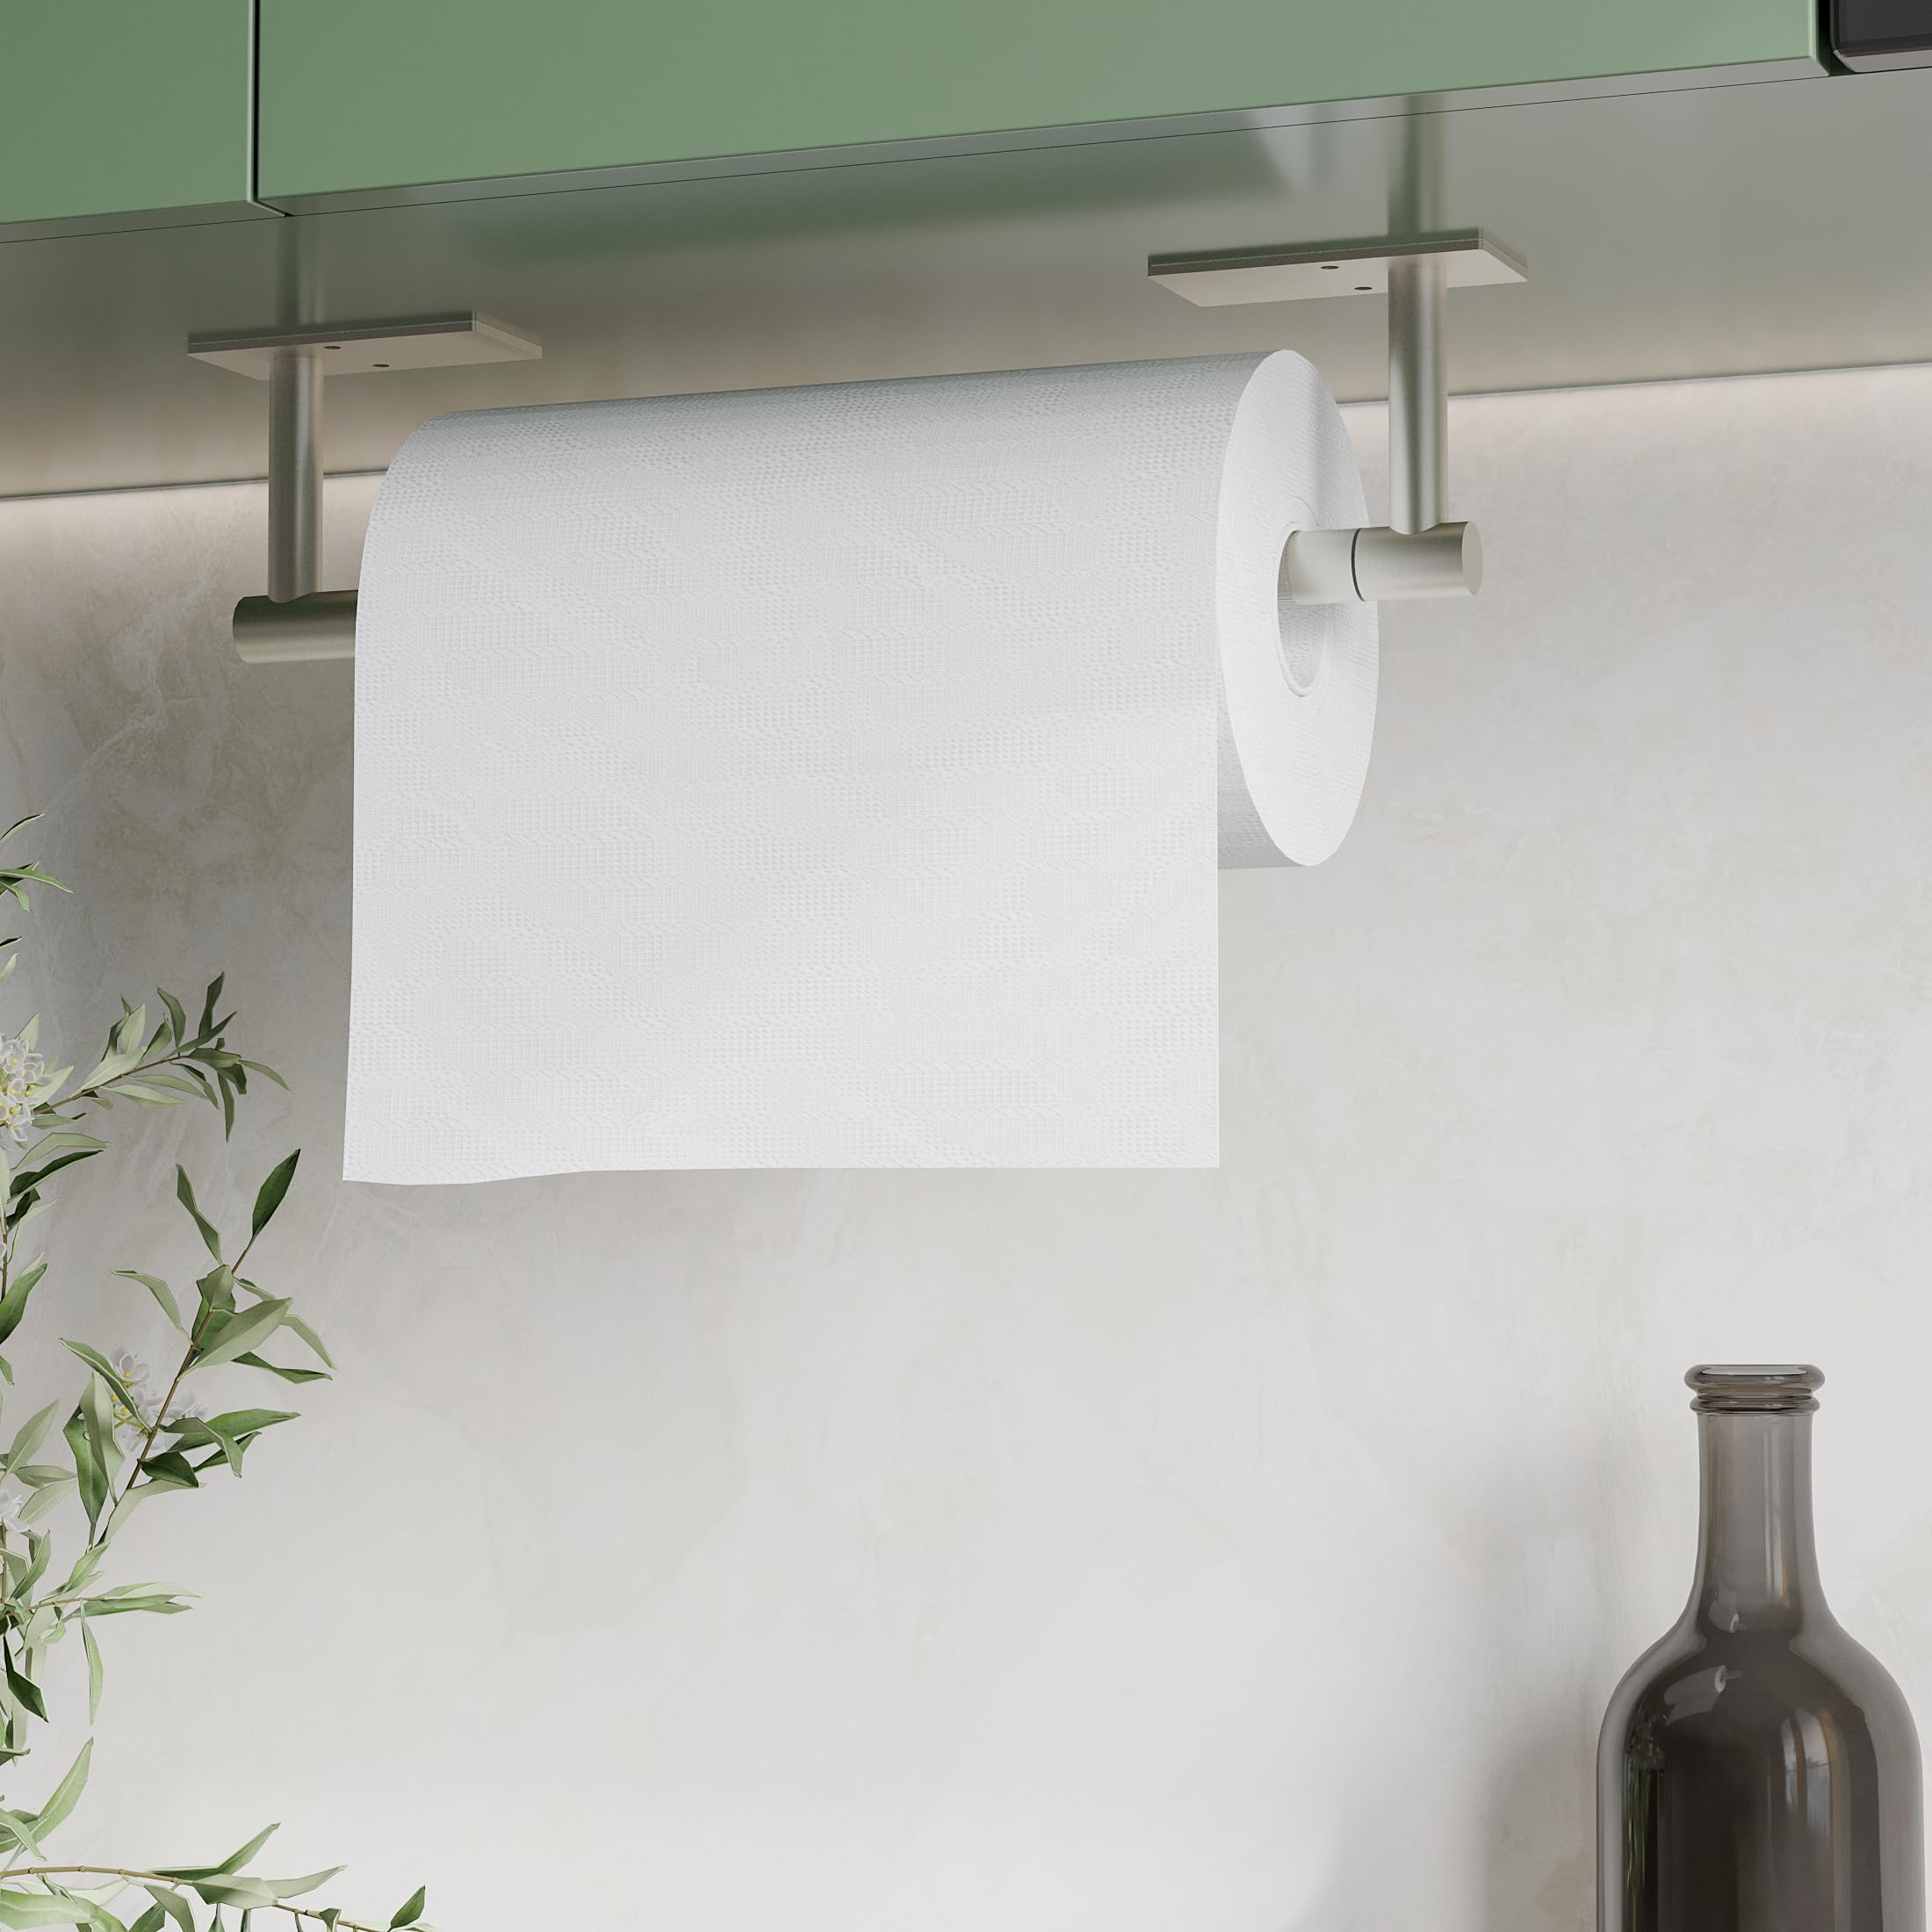 WZRUA Brushed Paper Towel Holder Under Cabinet, Self Adhesive Paper Towel Holder or Wall Mount Paper Towel Holder for Kitchen Bathroom SUS304 Stainless Steel Square Base